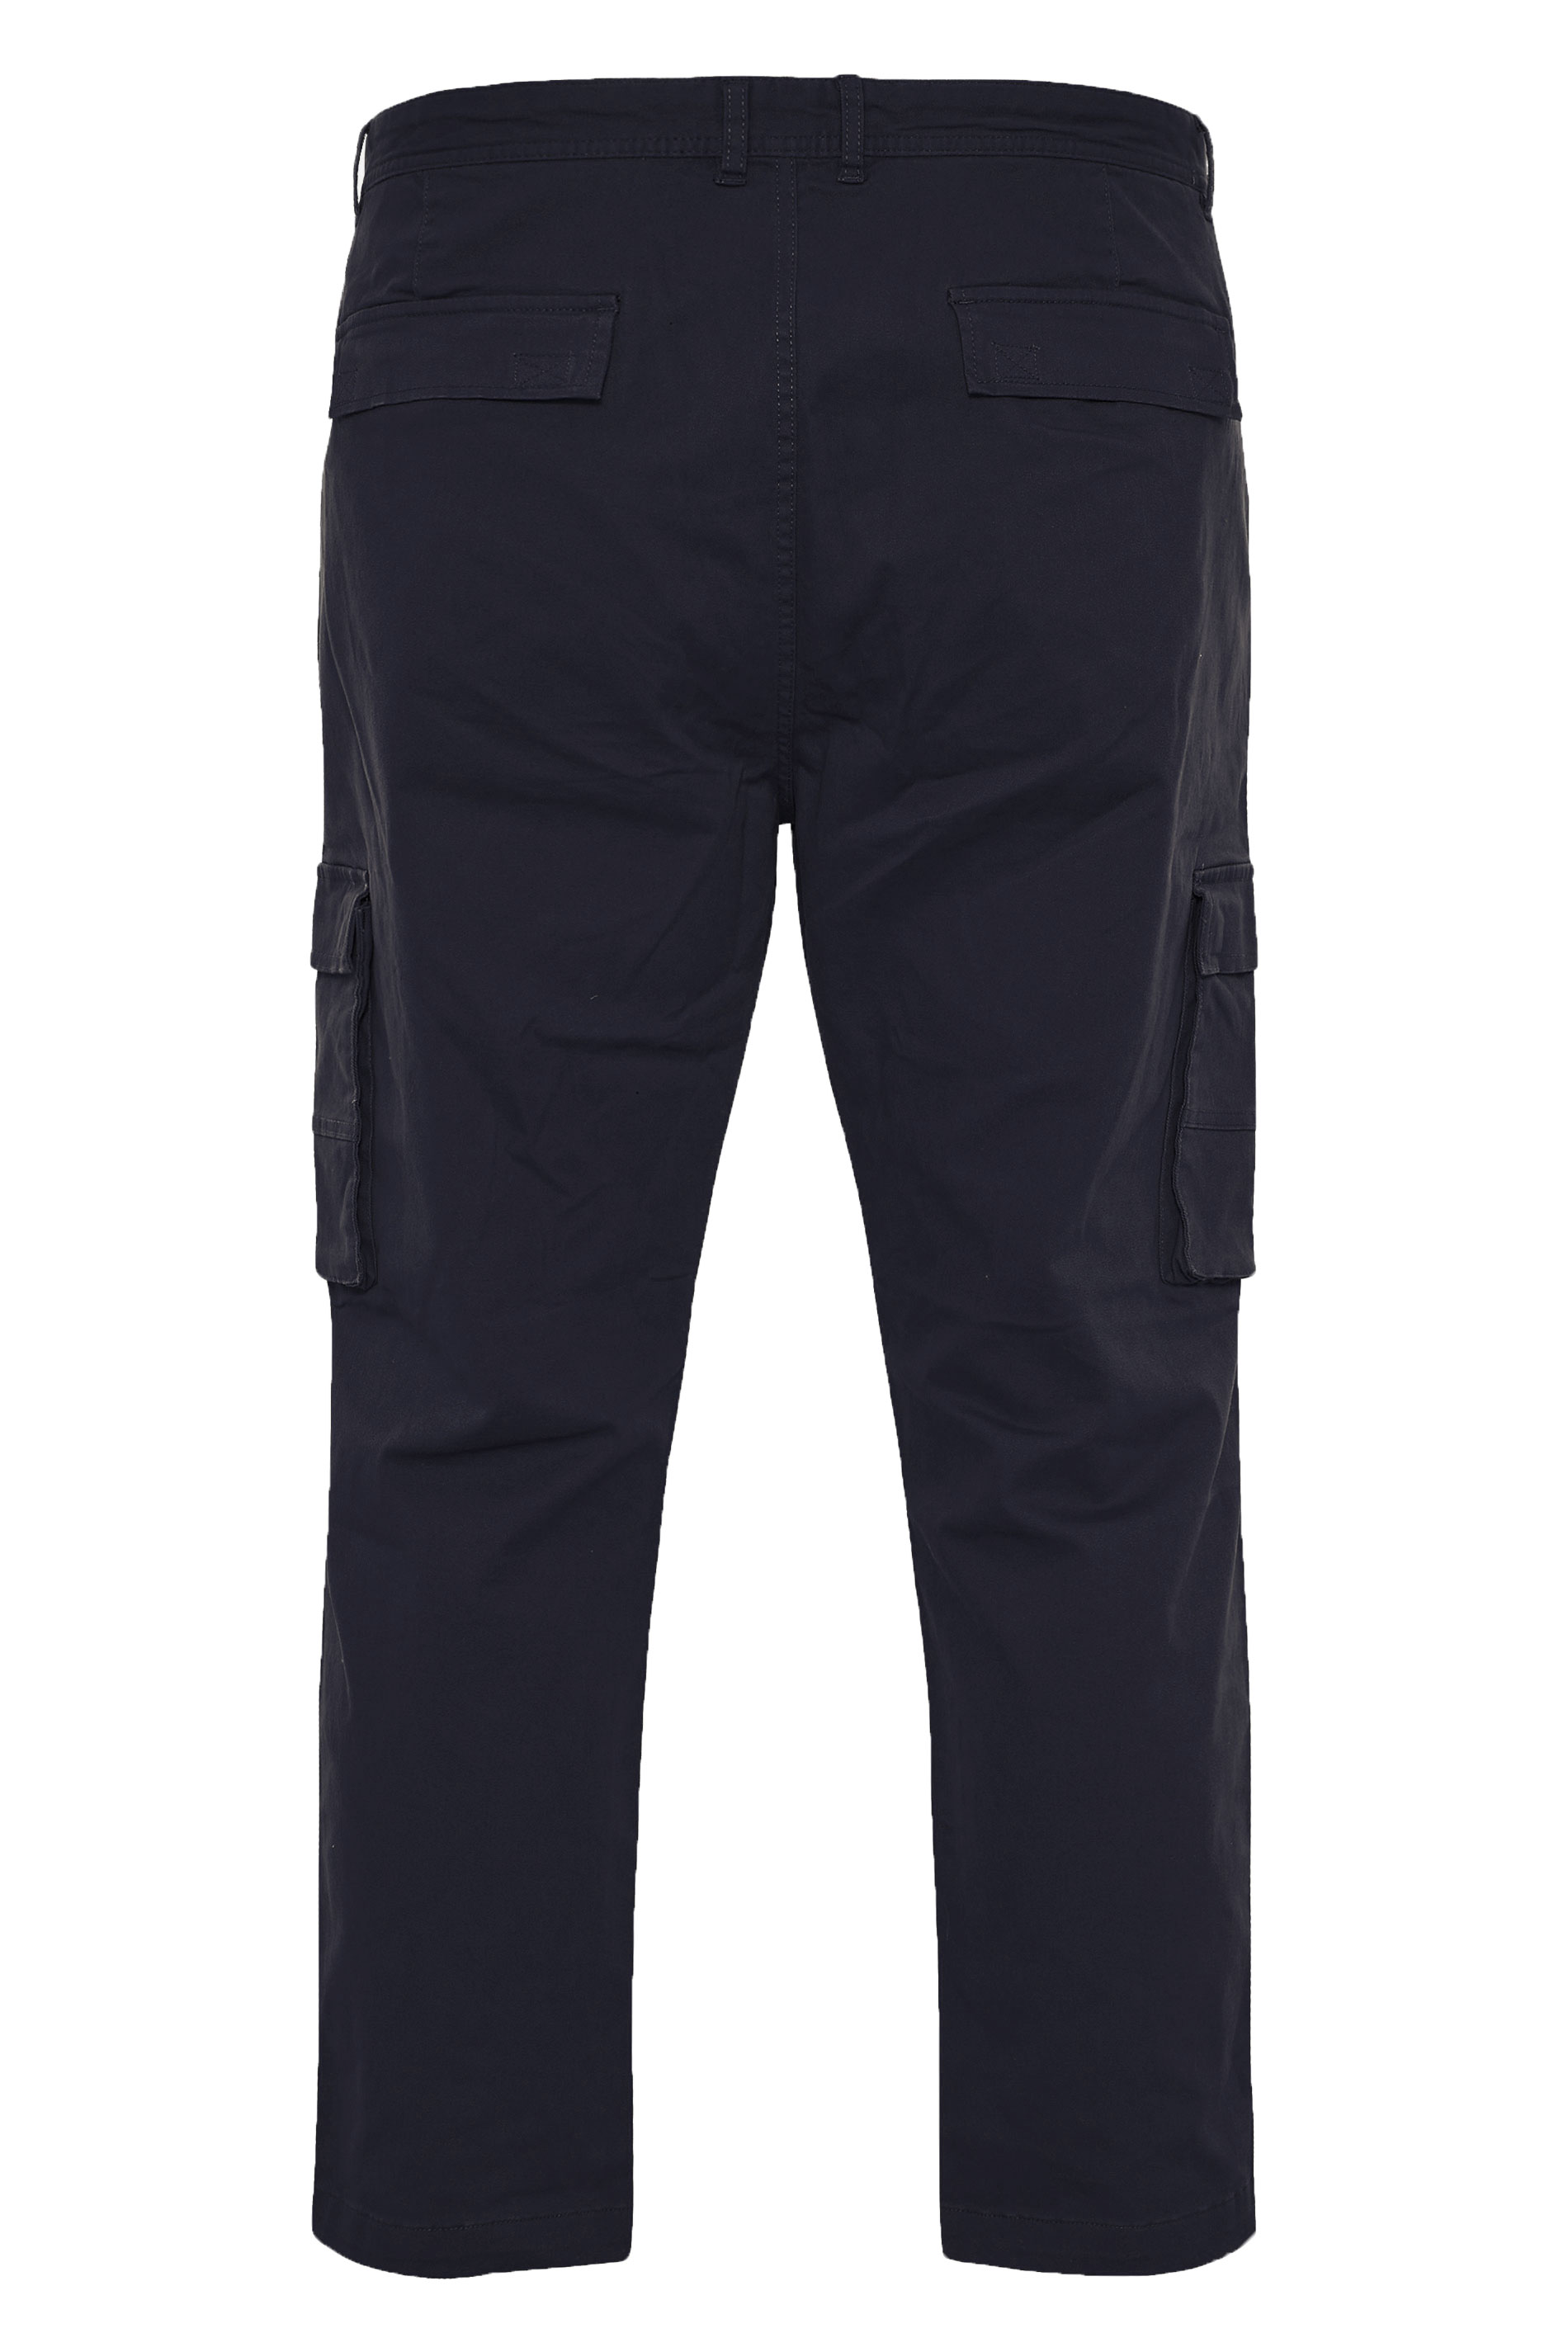 BadRhino Navy Blue Stretch Cargo Trousers | BadRhino